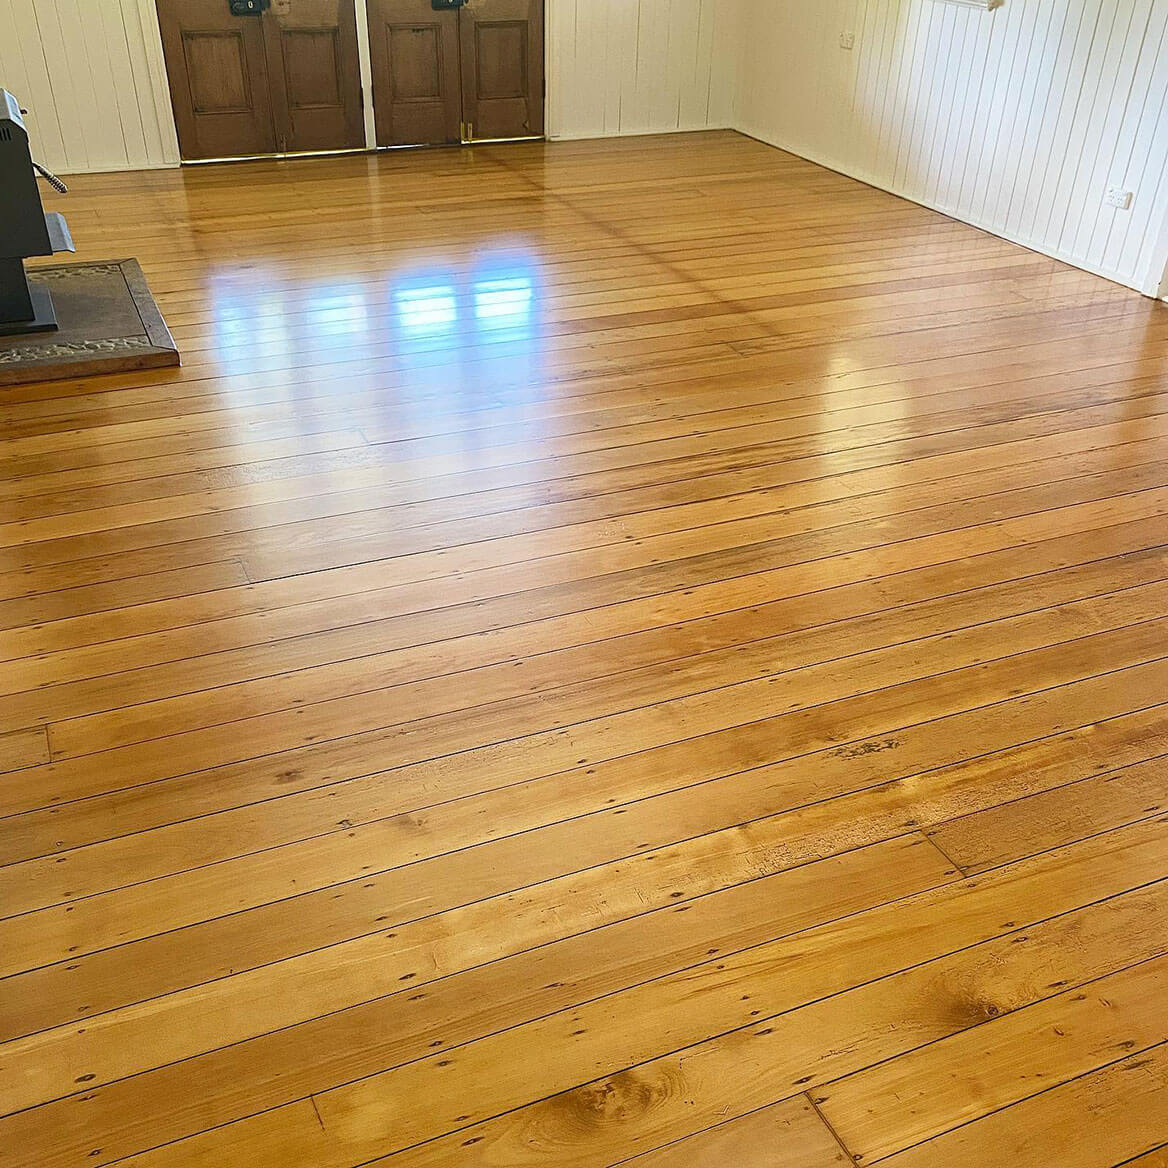 Hoop Pine floor restored